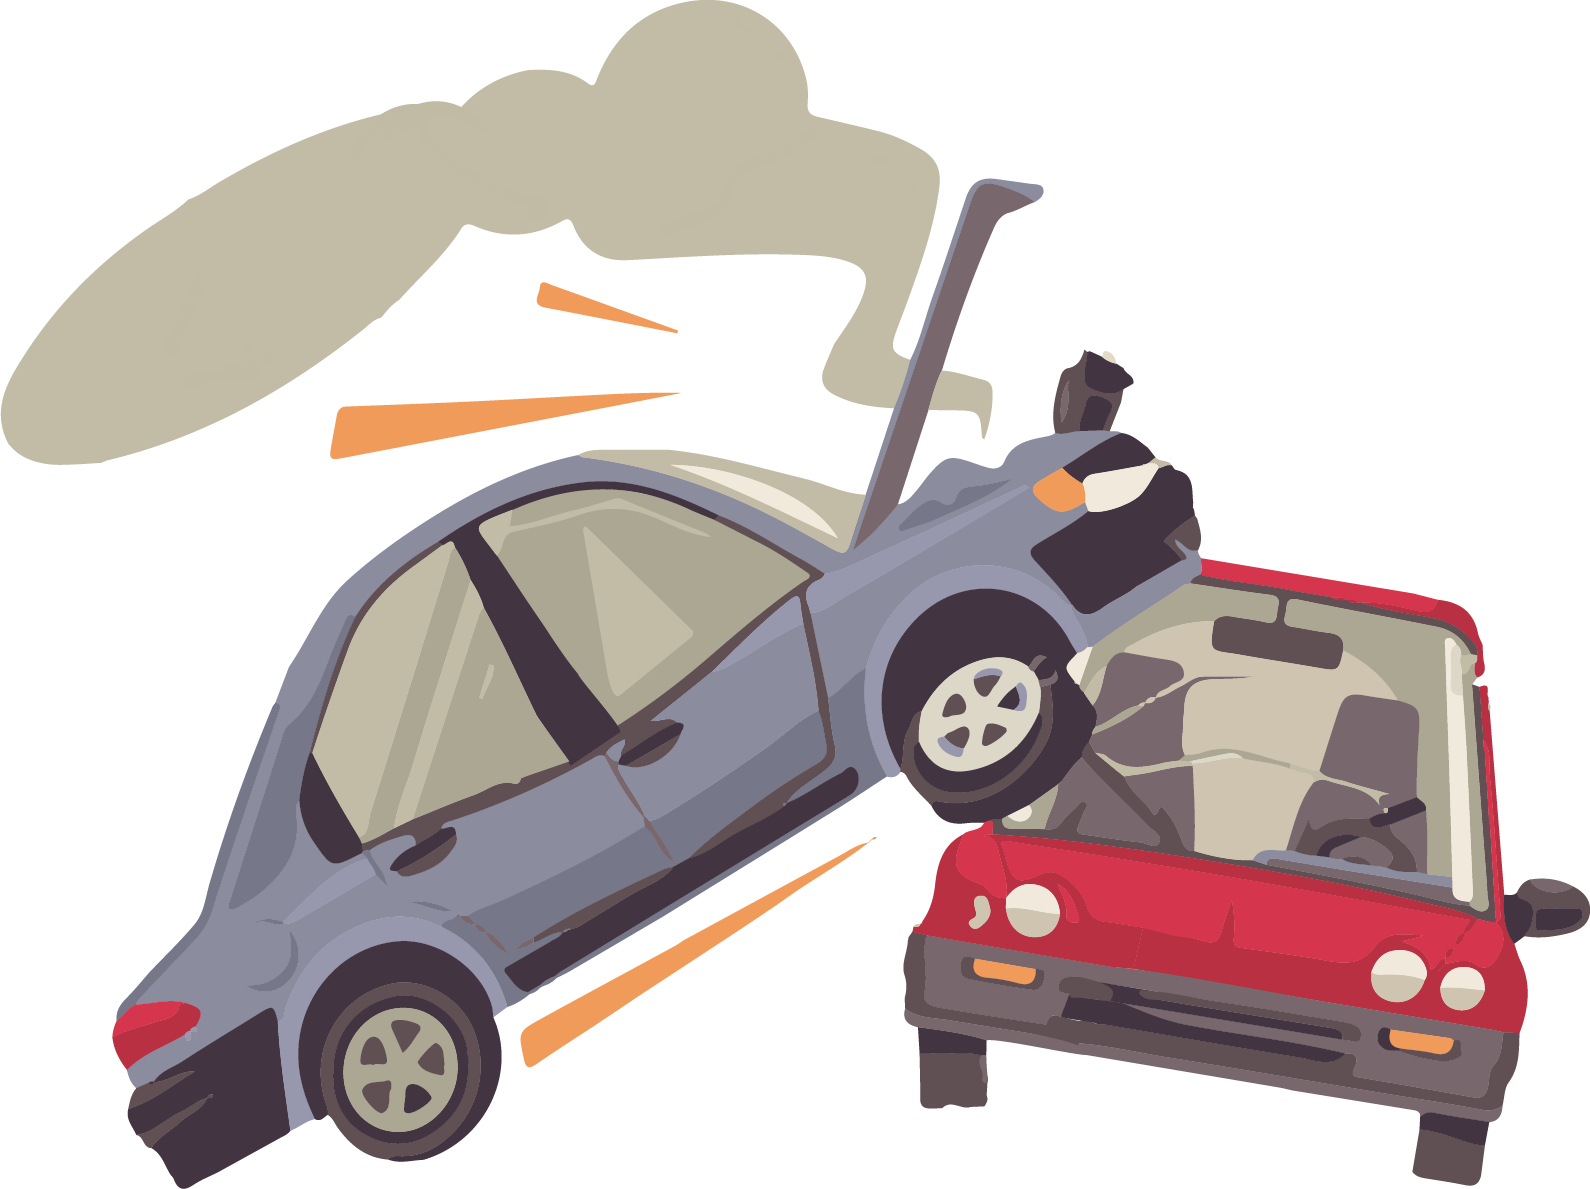 Car Accident Illustration